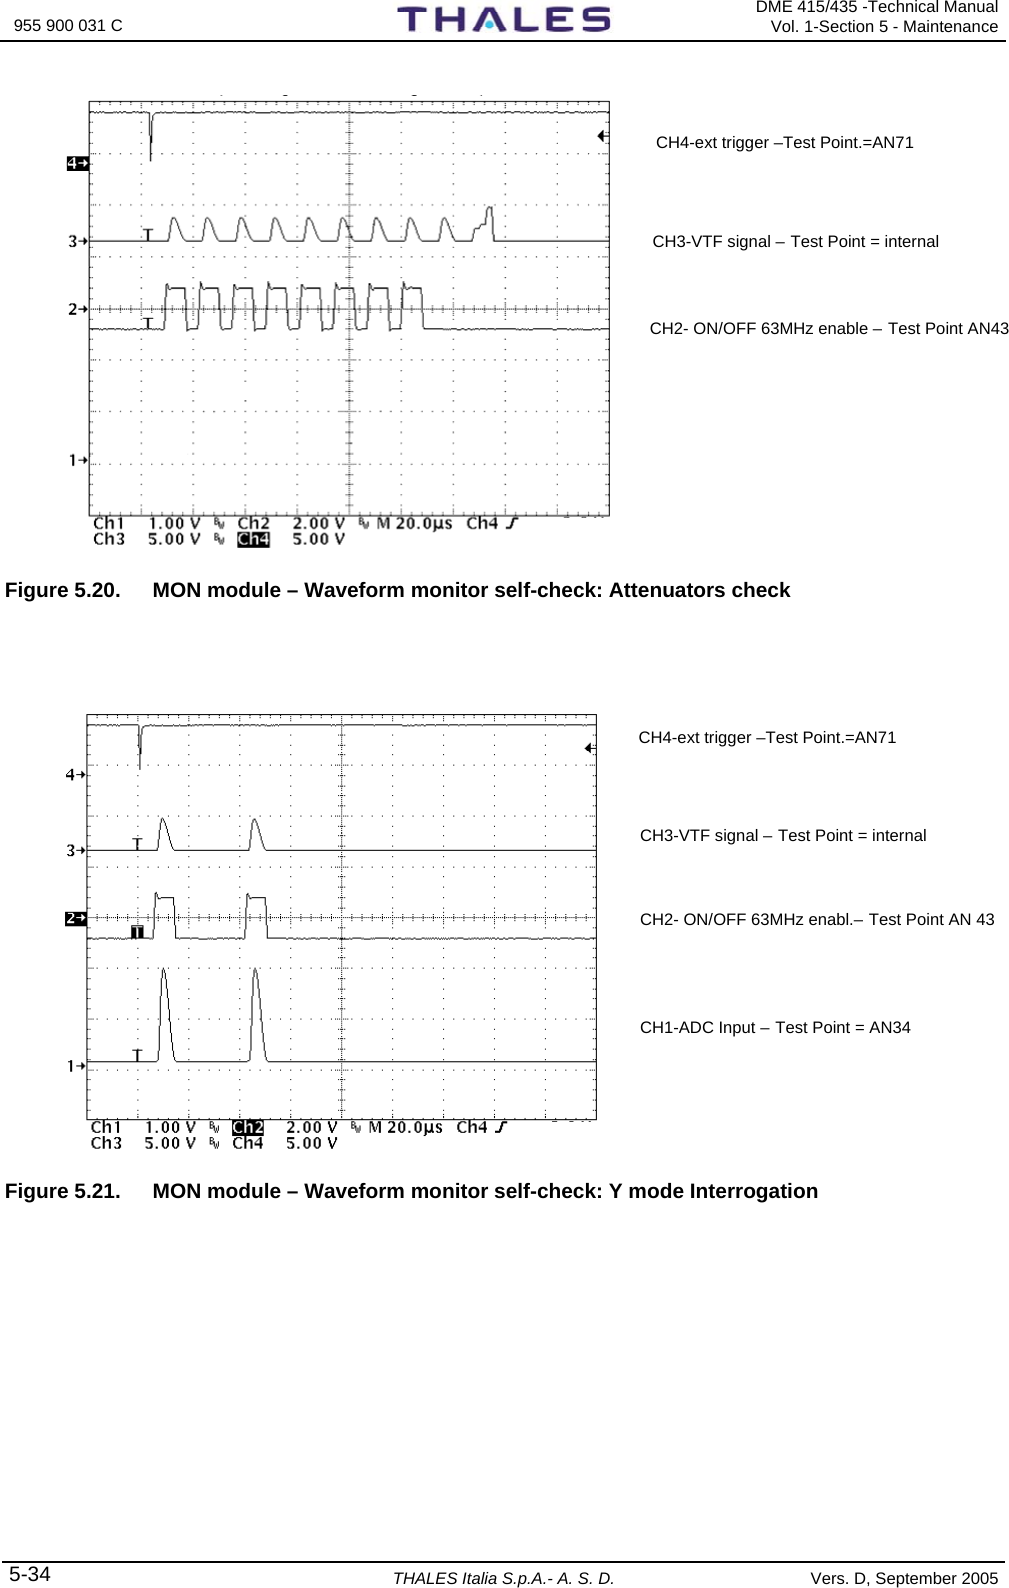  955 900 031 C   DME 415/435 -Technical ManualVol. 1-Section 5 - Maintenance 5-34 THALES Italia S.p.A.- A. S. D. Vers. D, September 2005  Figure 5.20.  MON module – Waveform monitor self-check: Attenuators check     Figure 5.21.  MON module – Waveform monitor self-check: Y mode Interrogation    CH4-ext trigger –Test Point.=AN71  CH3-VTF signal – Test Point = internal  CH2- ON/OFF 63MHz enable – Test Point AN43  CH4-ext trigger –Test Point.=AN71  CH3-VTF signal – Test Point = internal  CH2- ON/OFF 63MHz enabl.– Test Point AN 43  CH1-ADC Input – Test Point = AN34  